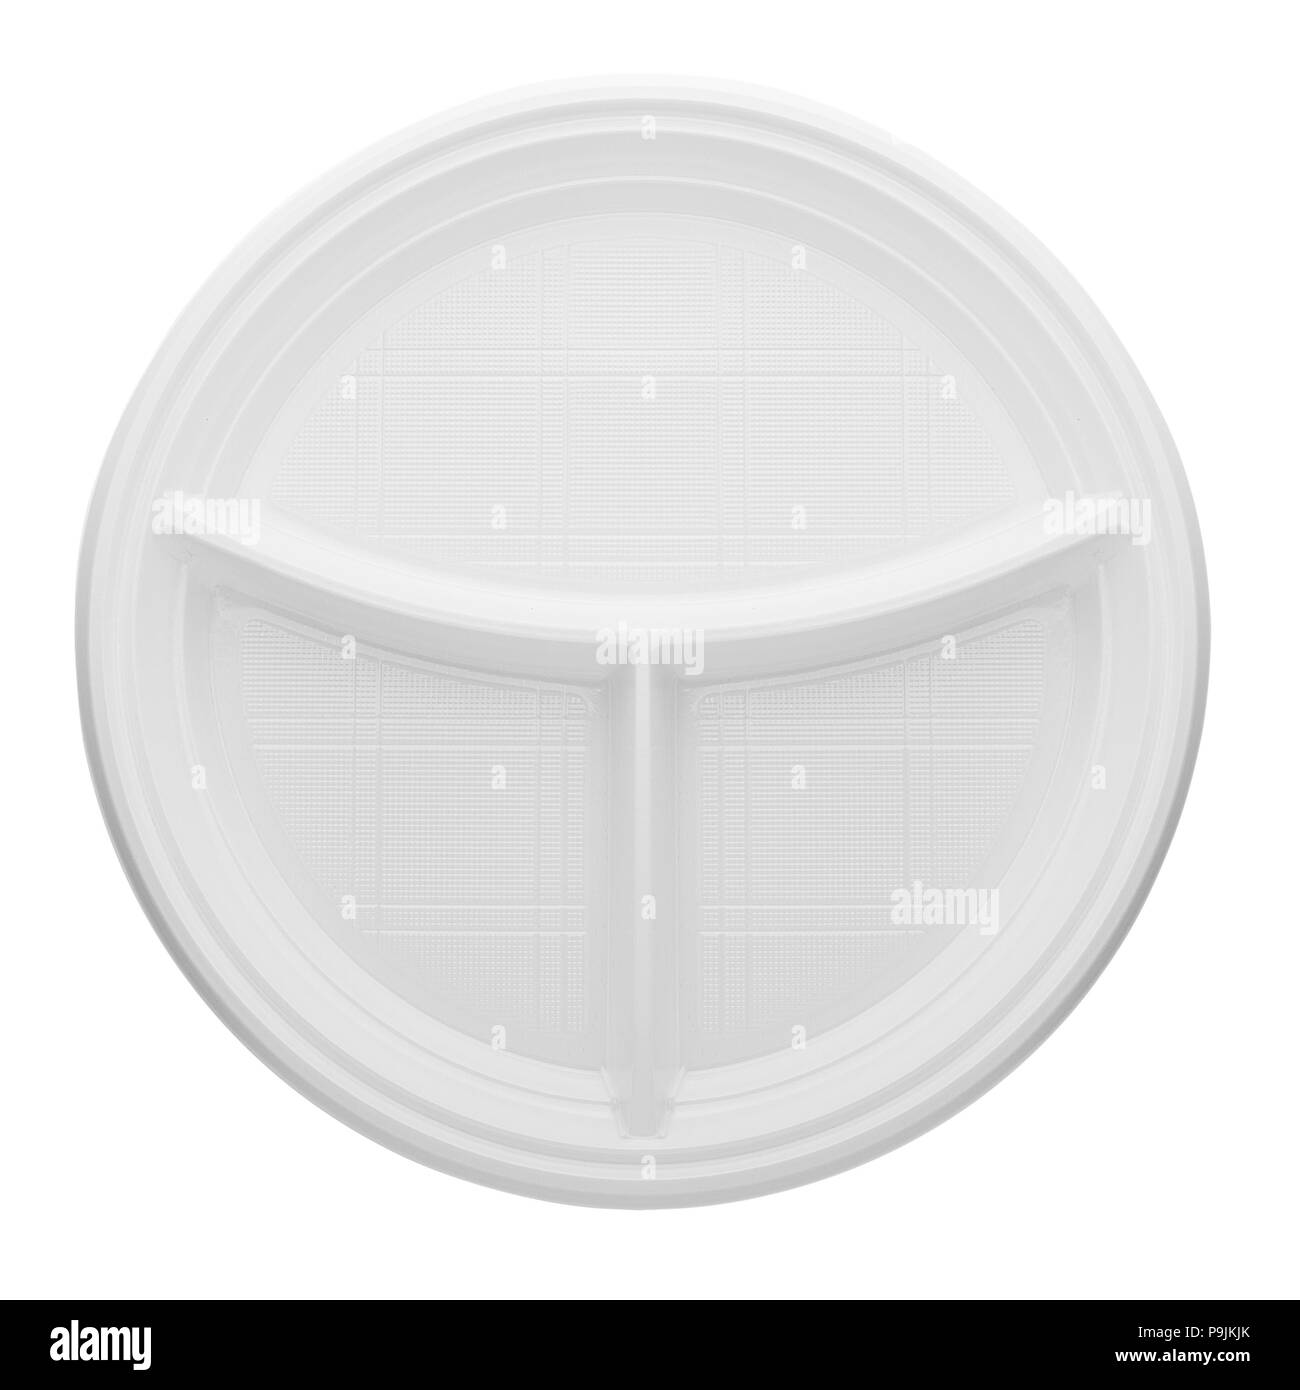 Plaque en plastique blanc jetables, chemin, isolated on white Banque D'Images